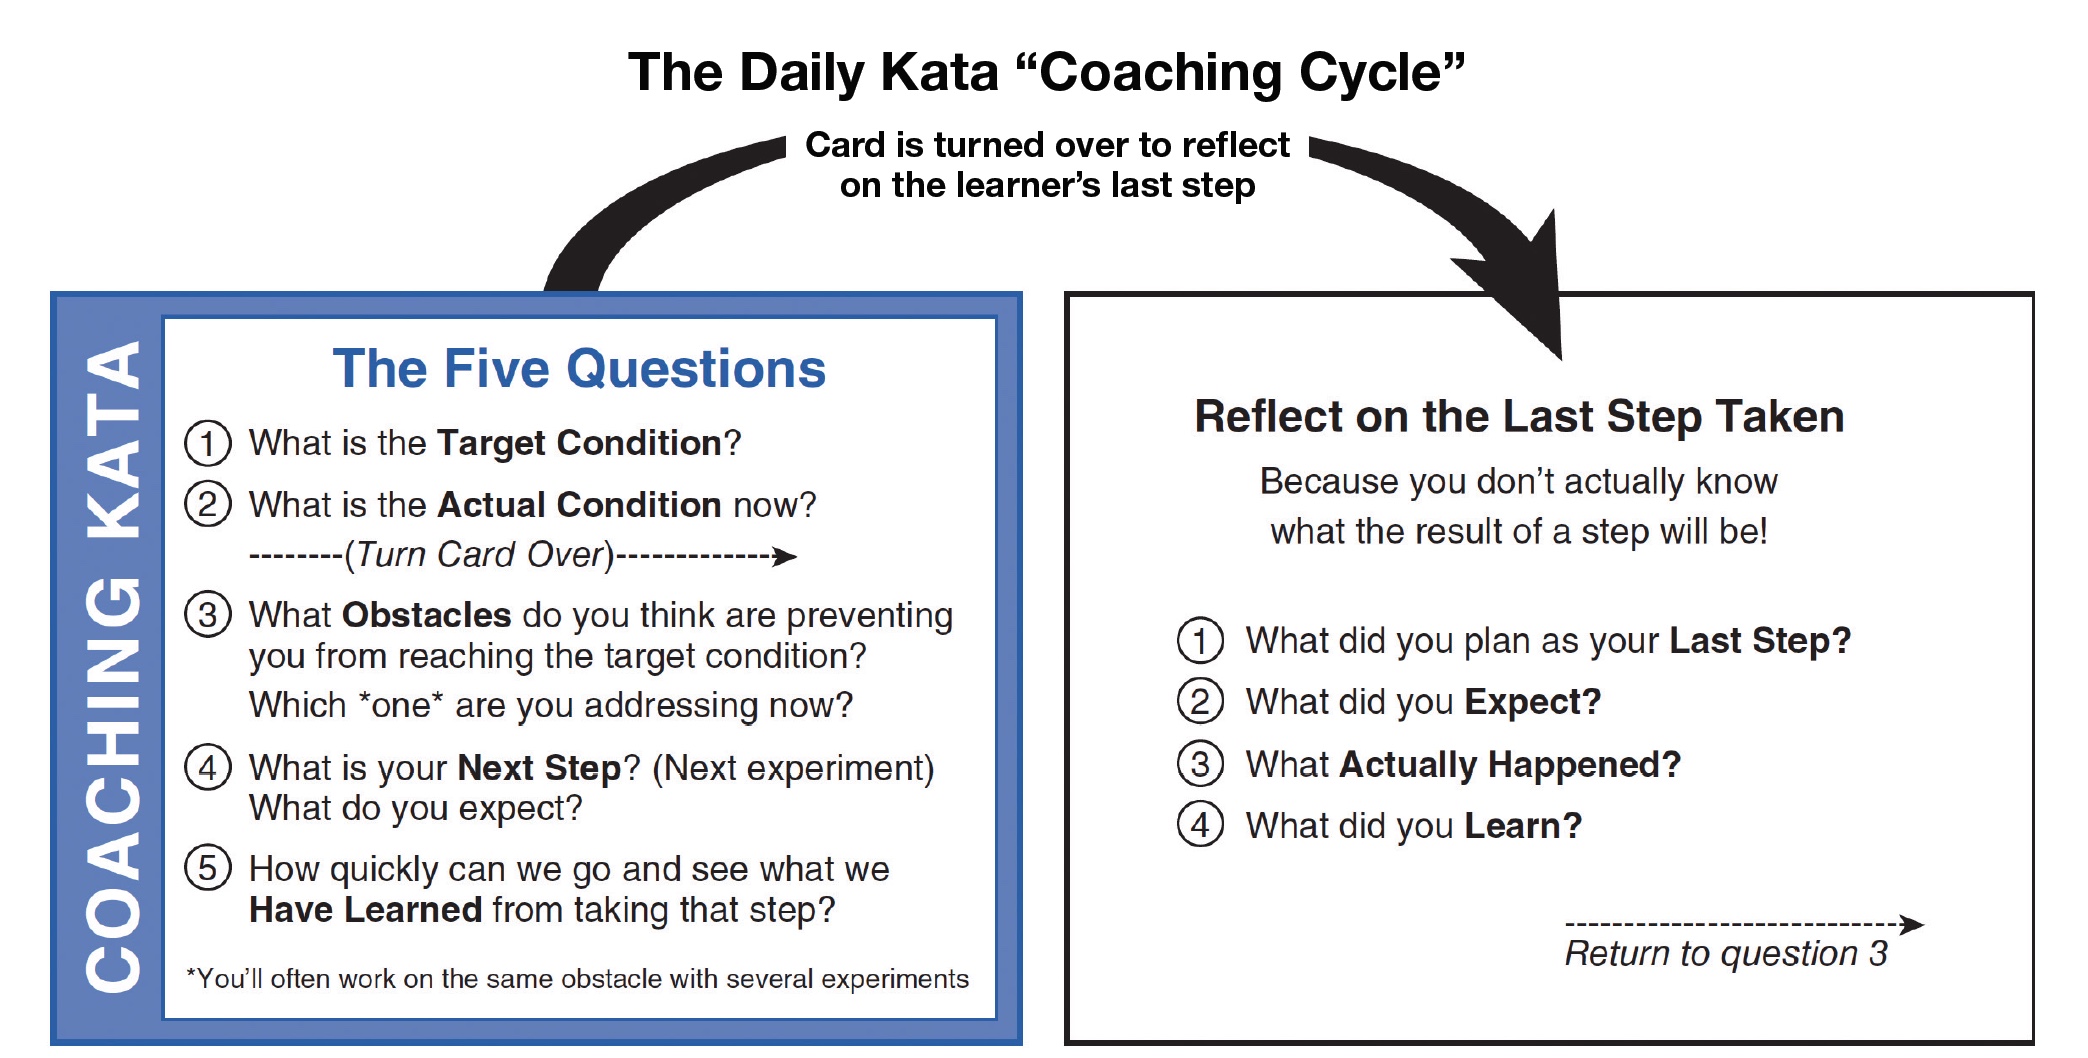 The Daily Kata "Coaching" Cycle